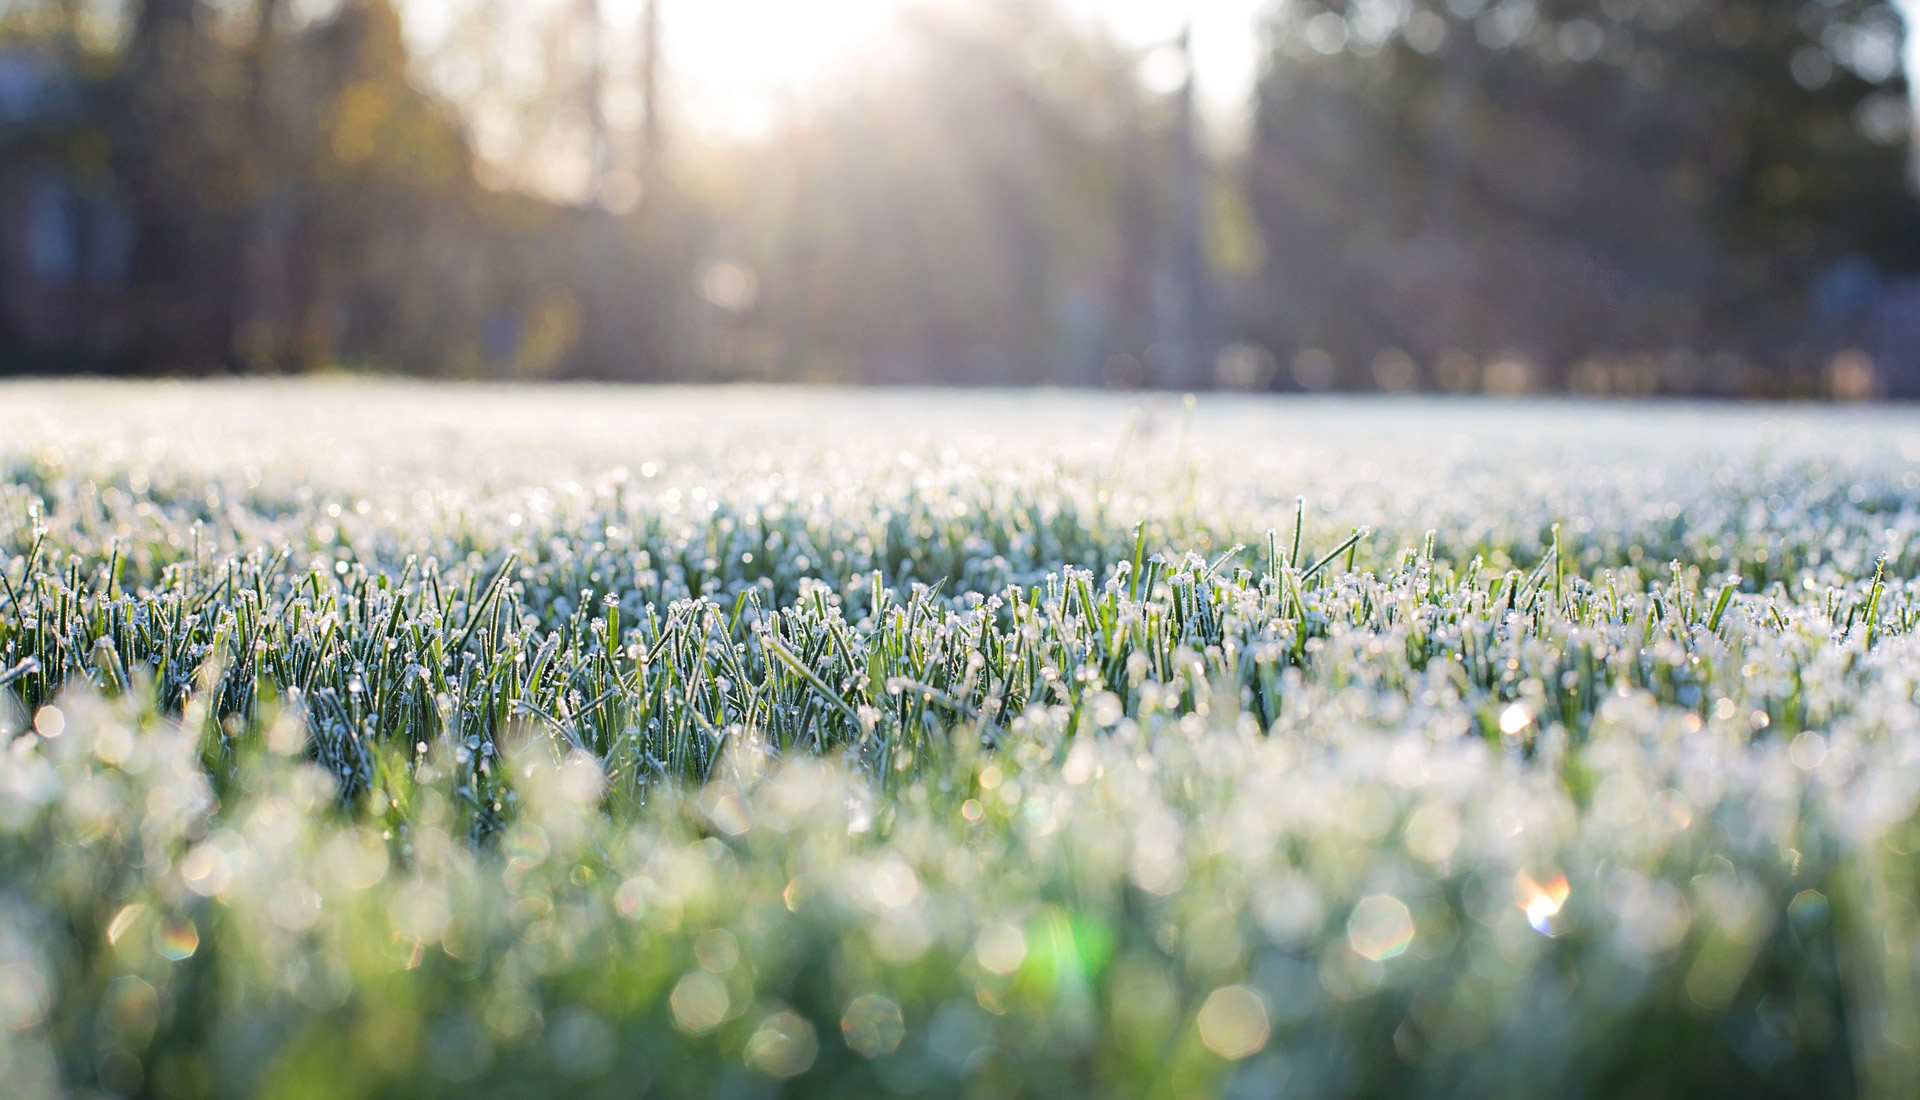 frost-on-grass - pixabay.com